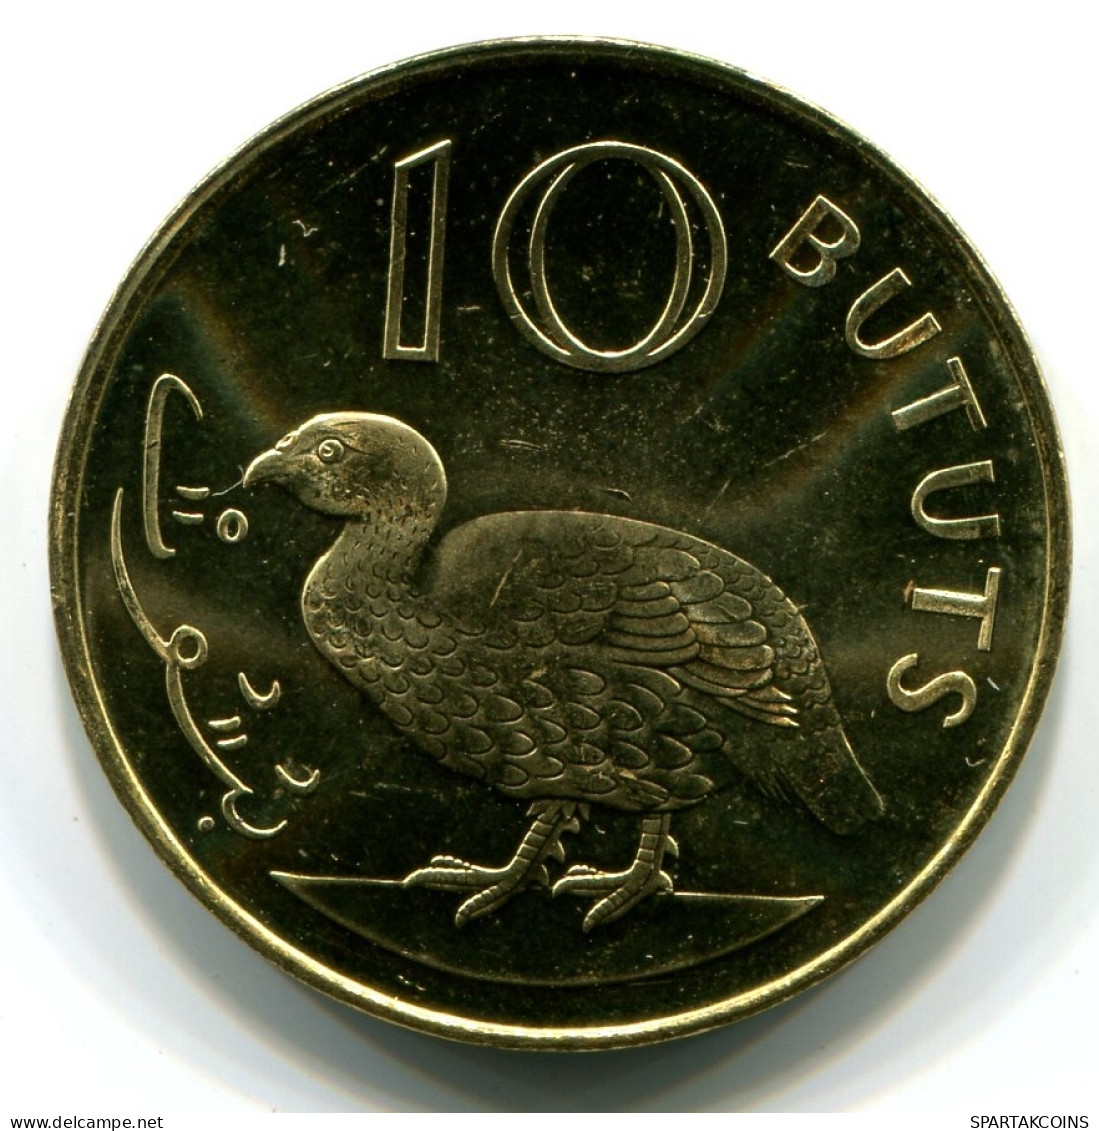 10 BUTUT 1998 GAMBIA UNC Cluster Of Peanuts Moneda #W11106.E - Gambia